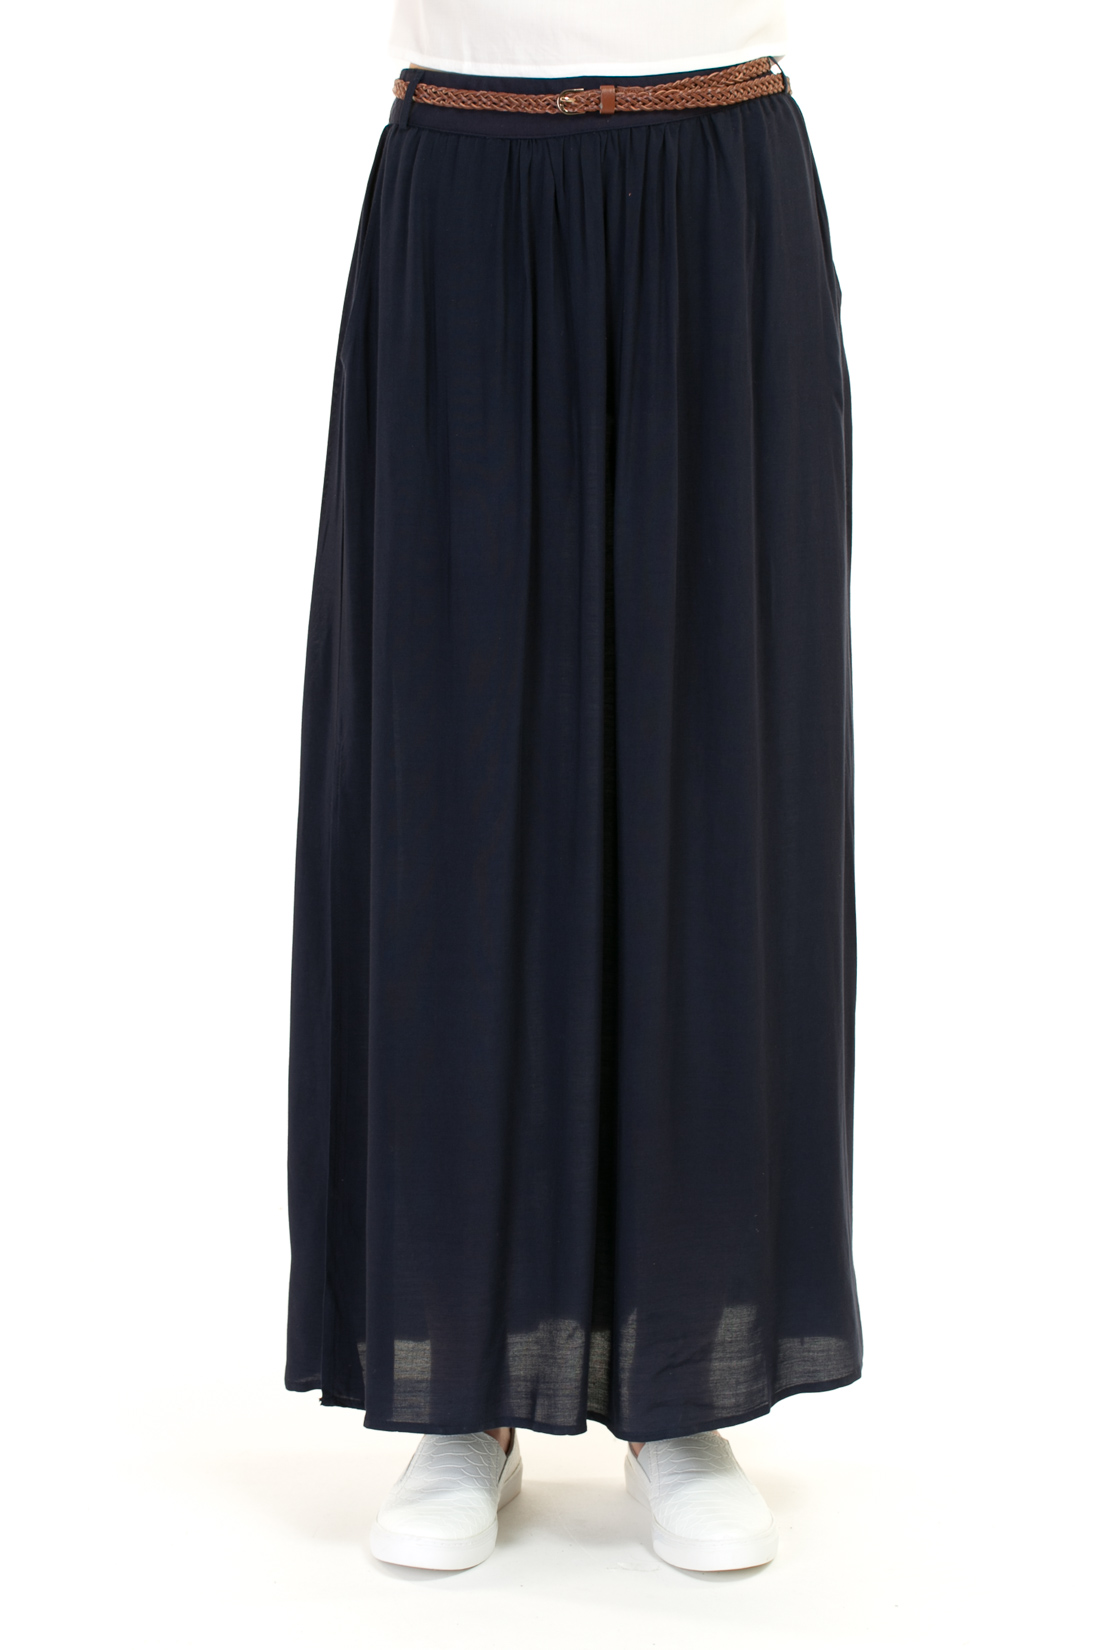 Длинная юбка с ремешком (арт. baon B477041), размер 3XL, цвет синий Длинная юбка с ремешком (арт. baon B477041) - фото 4